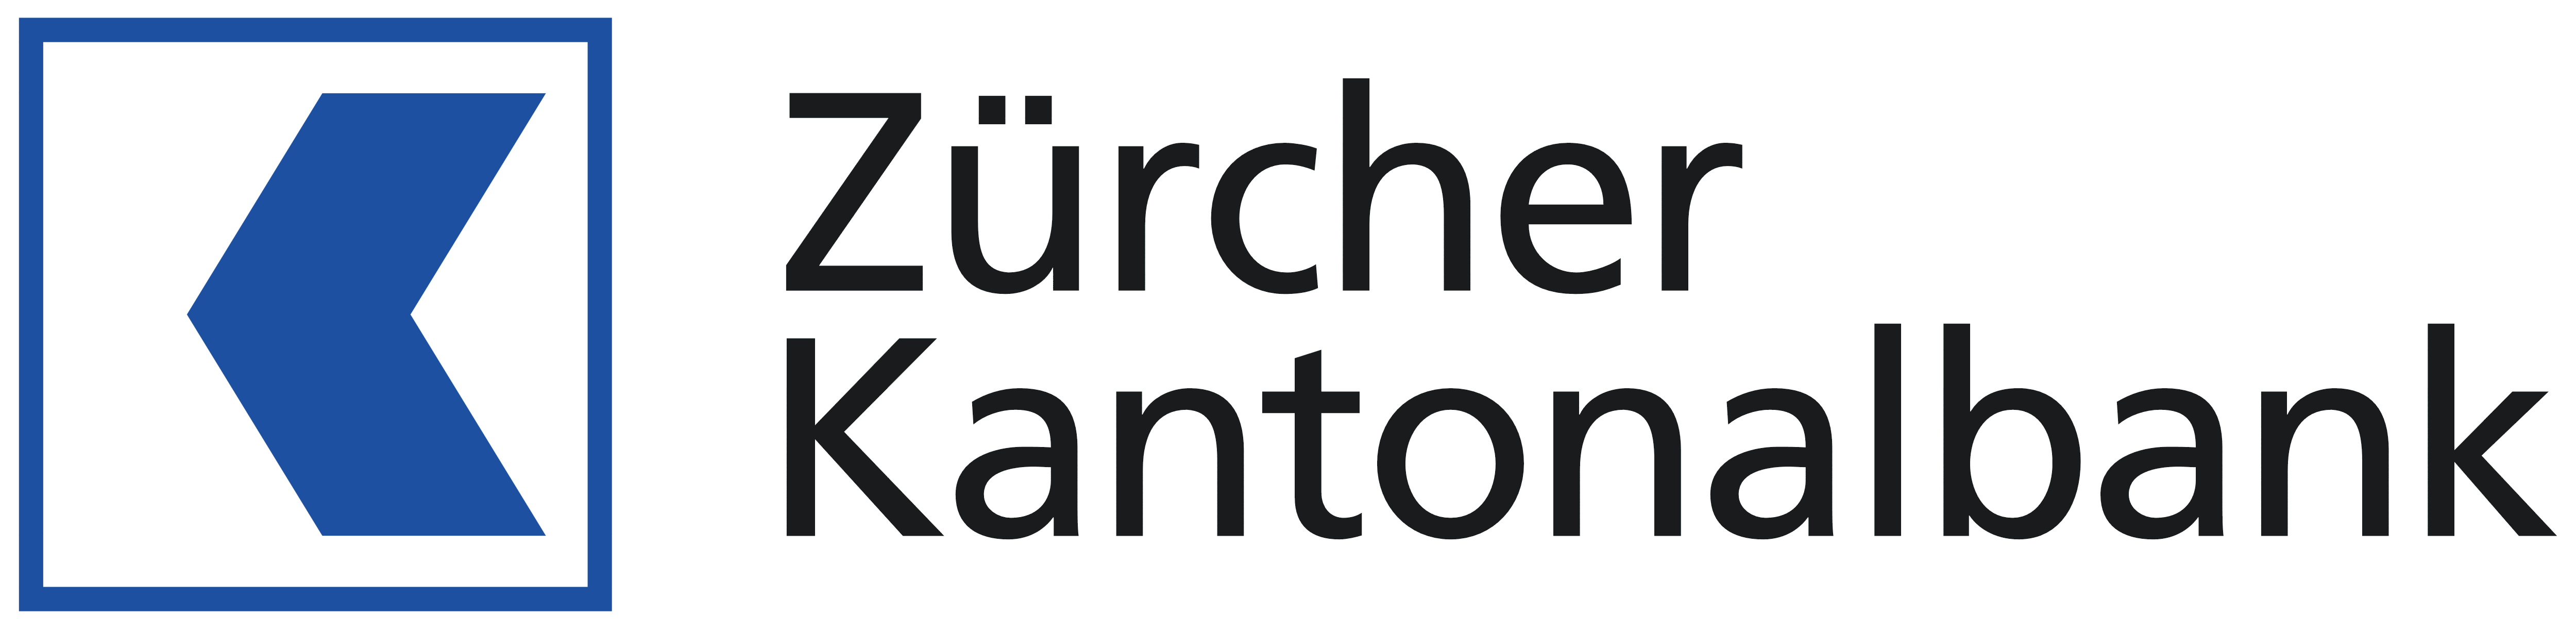 Zürcher Kantonalbank Brand Logo